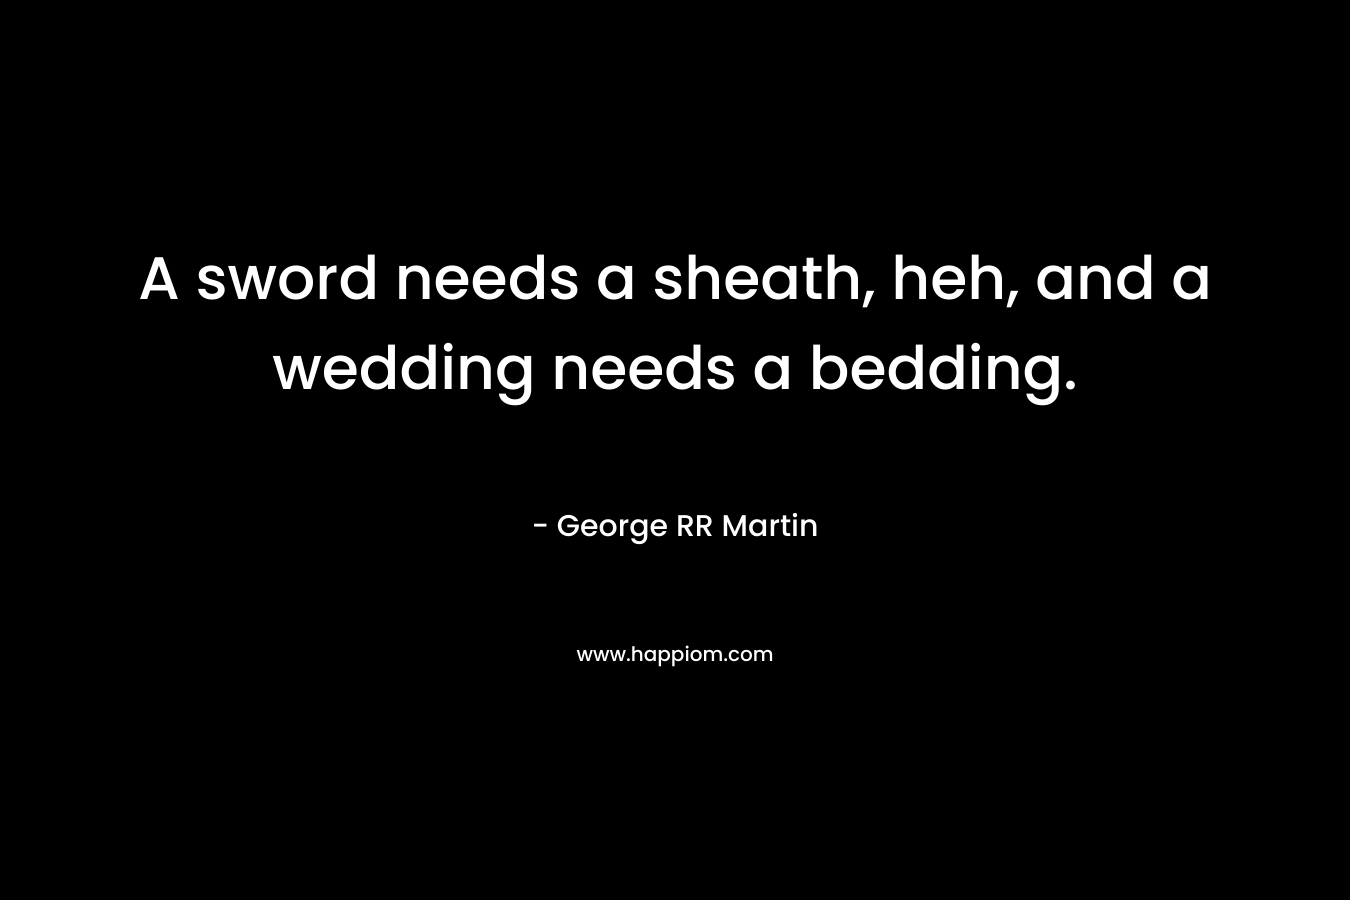 A sword needs a sheath, heh, and a wedding needs a bedding.